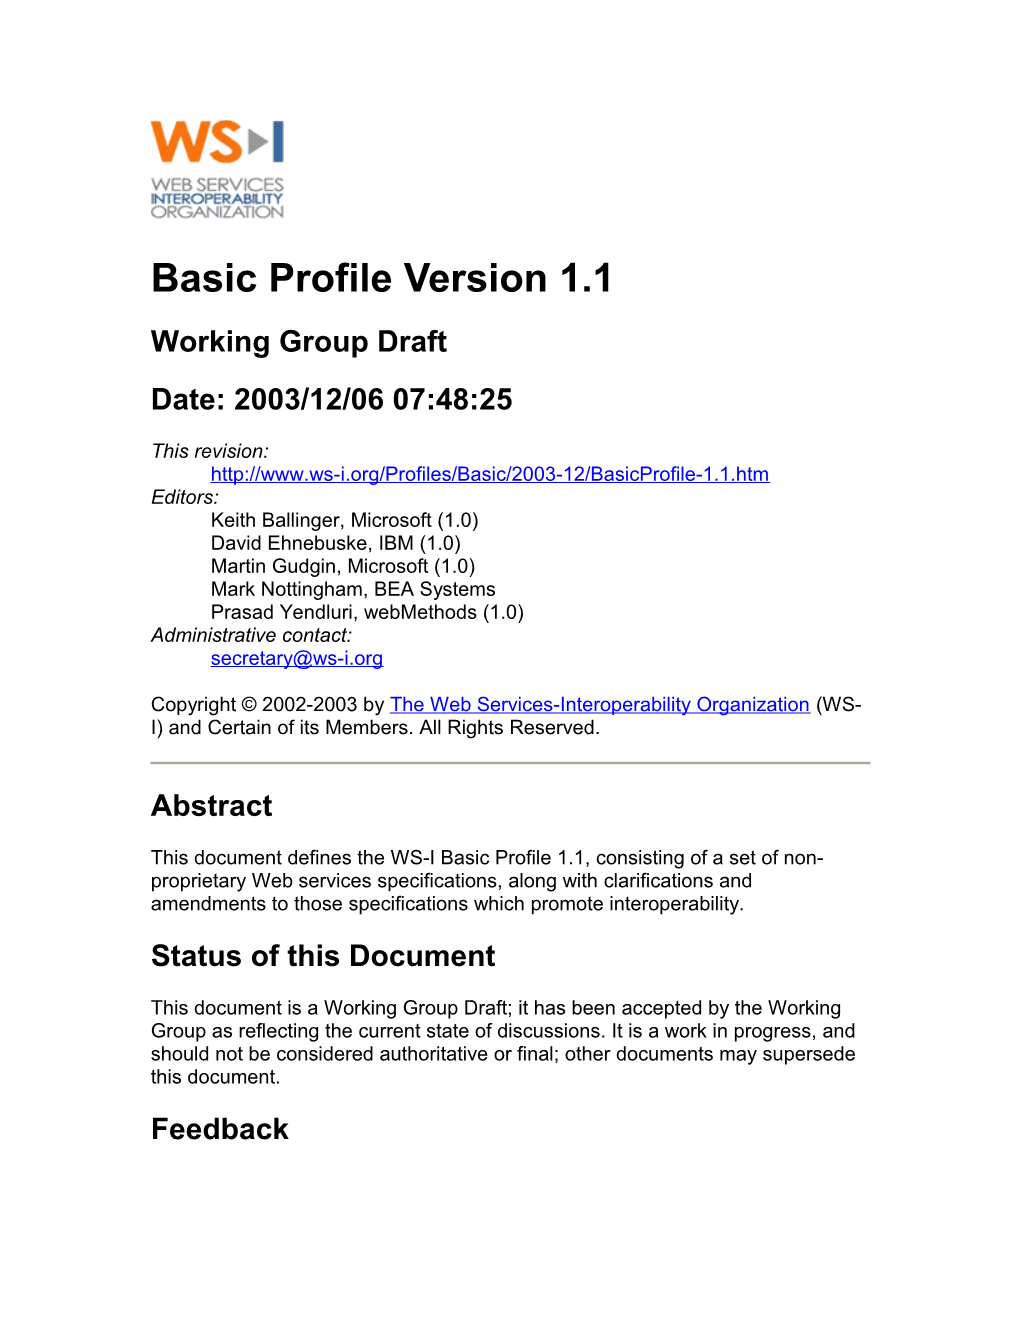 Basic Profile - Version 1.1 (WGD)